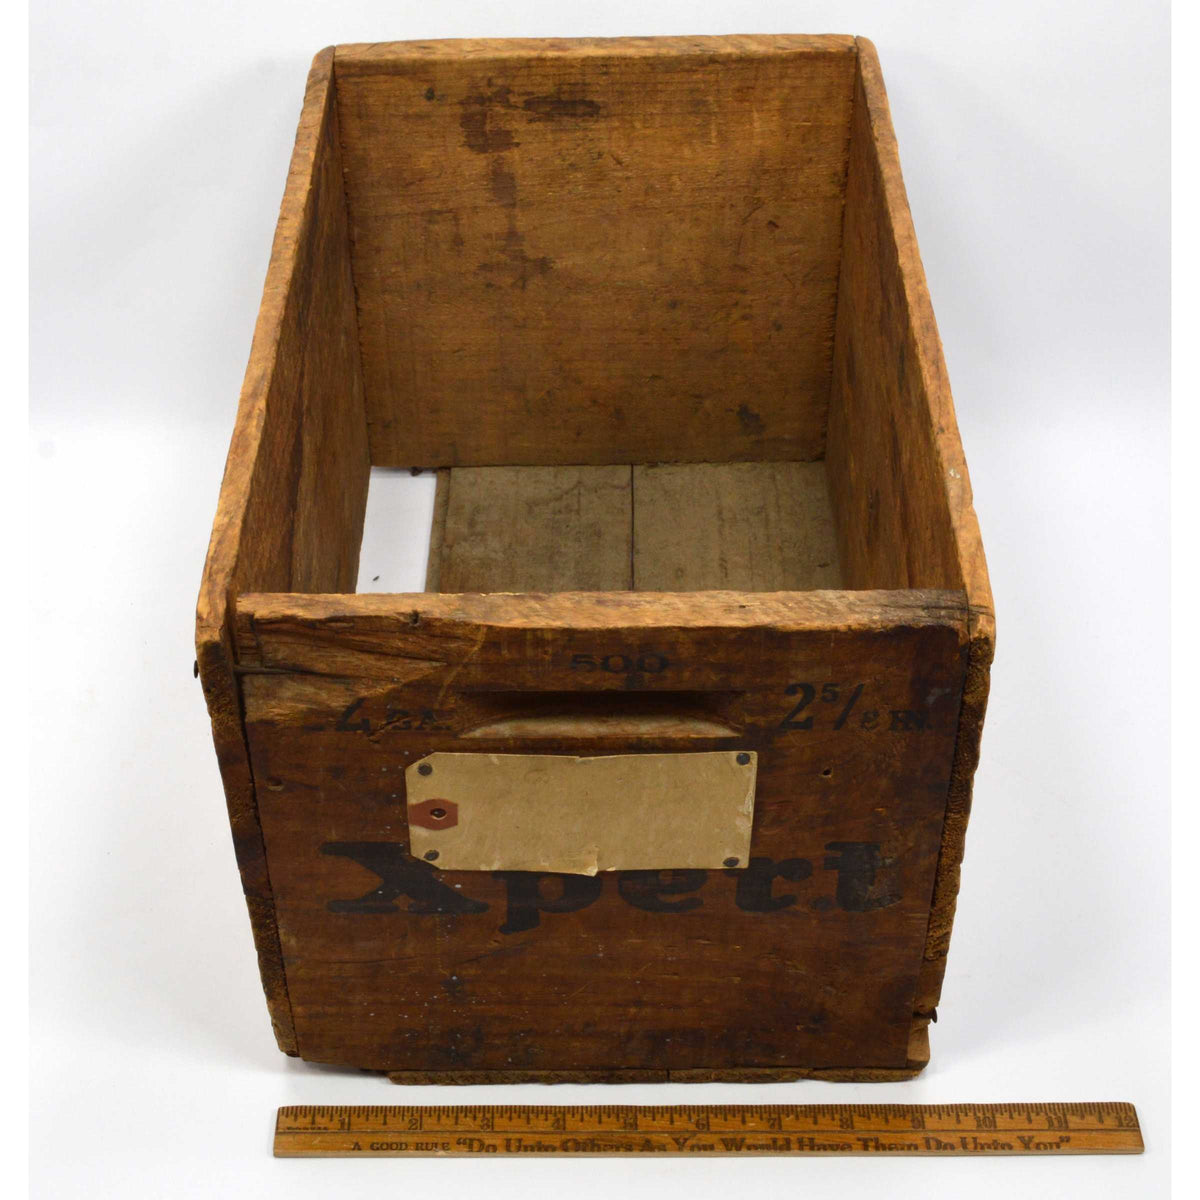 Vintage CO. "WORLD CHAMPION AMMUNITION" Wood Crate A Get A Grip &